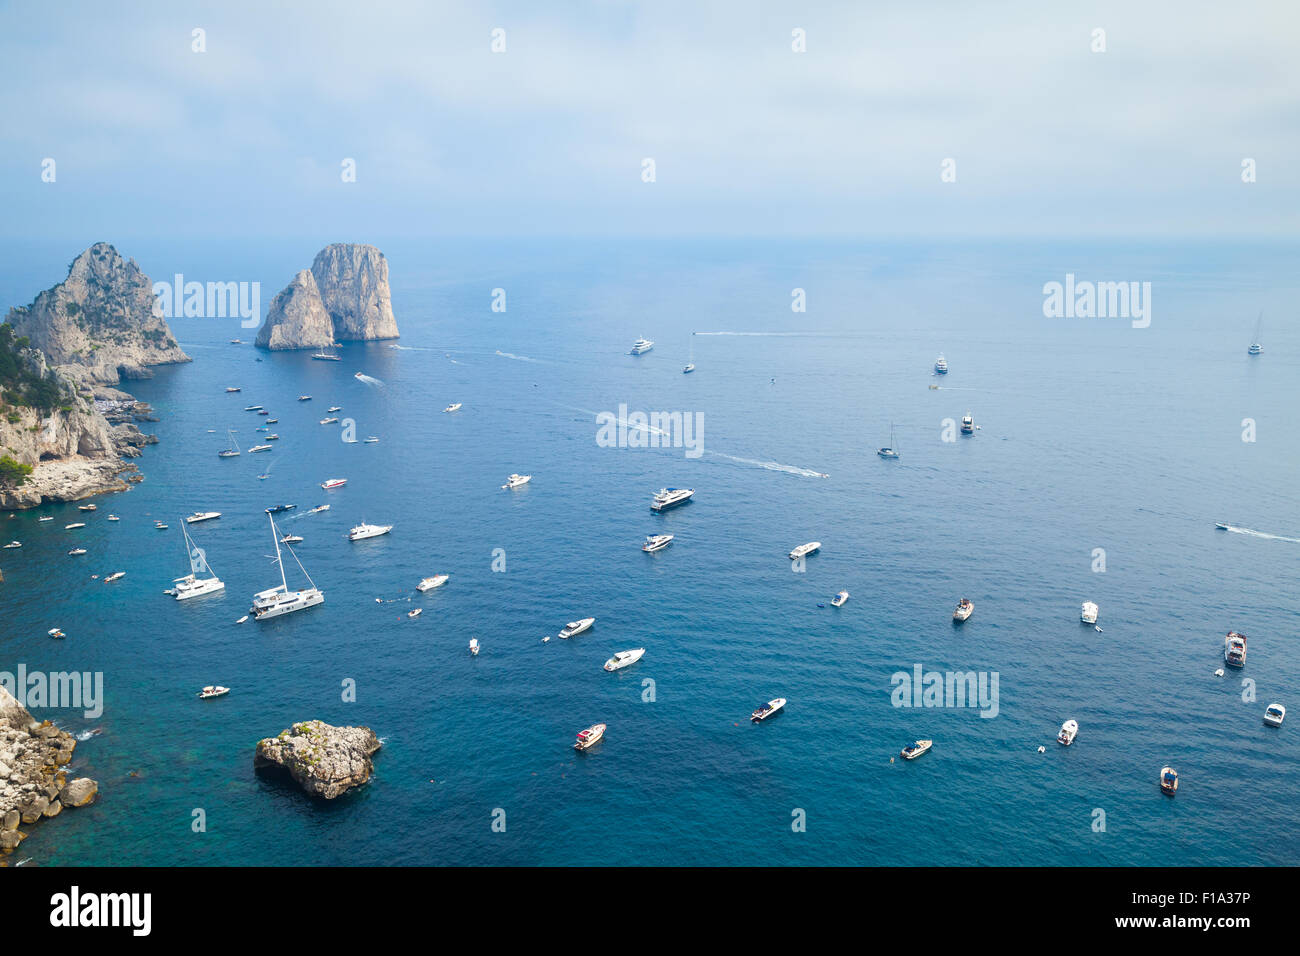 A vista de pájaro sobre los farallones de rocas de la isla de Capri, Italia Foto de stock